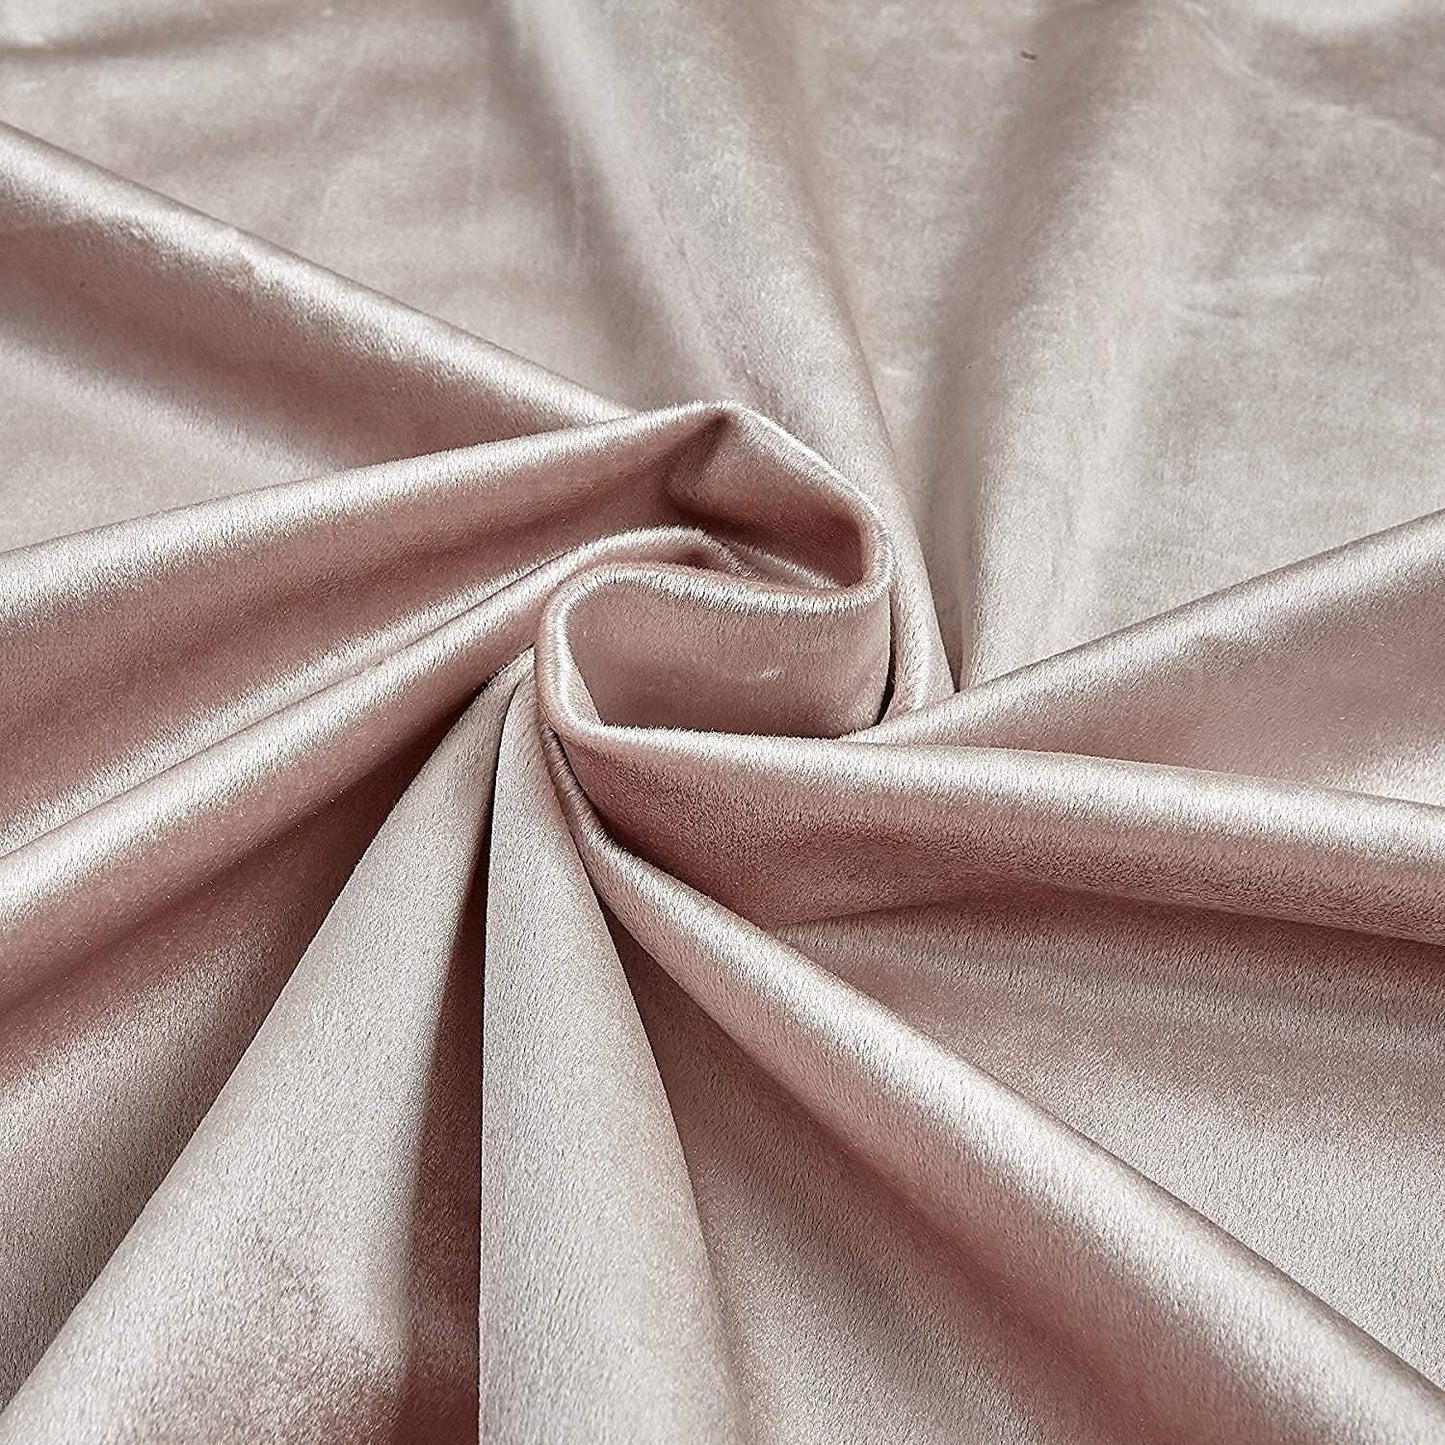 Upholstery Royal Velvet Fabric, 100% Polyester Upholstery Fabric (1 Yard, Blush)